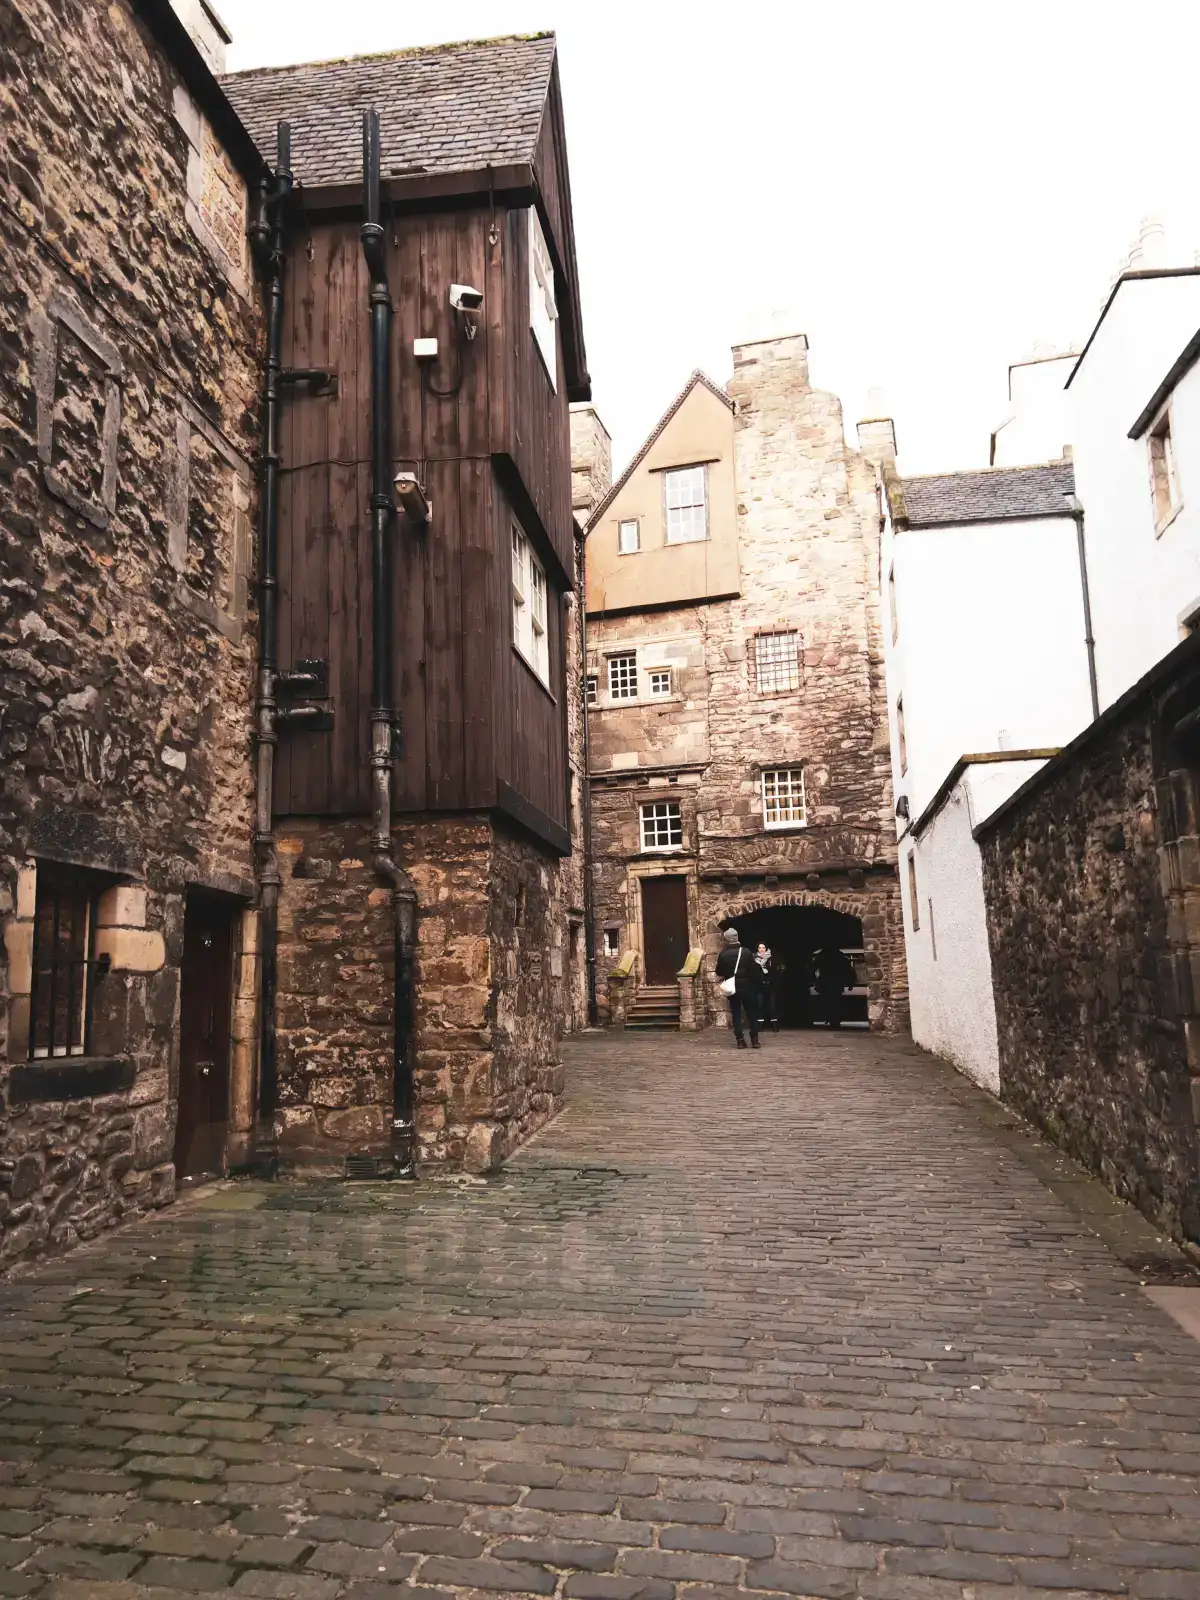 Bakehouse Close, Edynburg, Szkocja. Miejsce kręcenia scen do serialu Outlander.